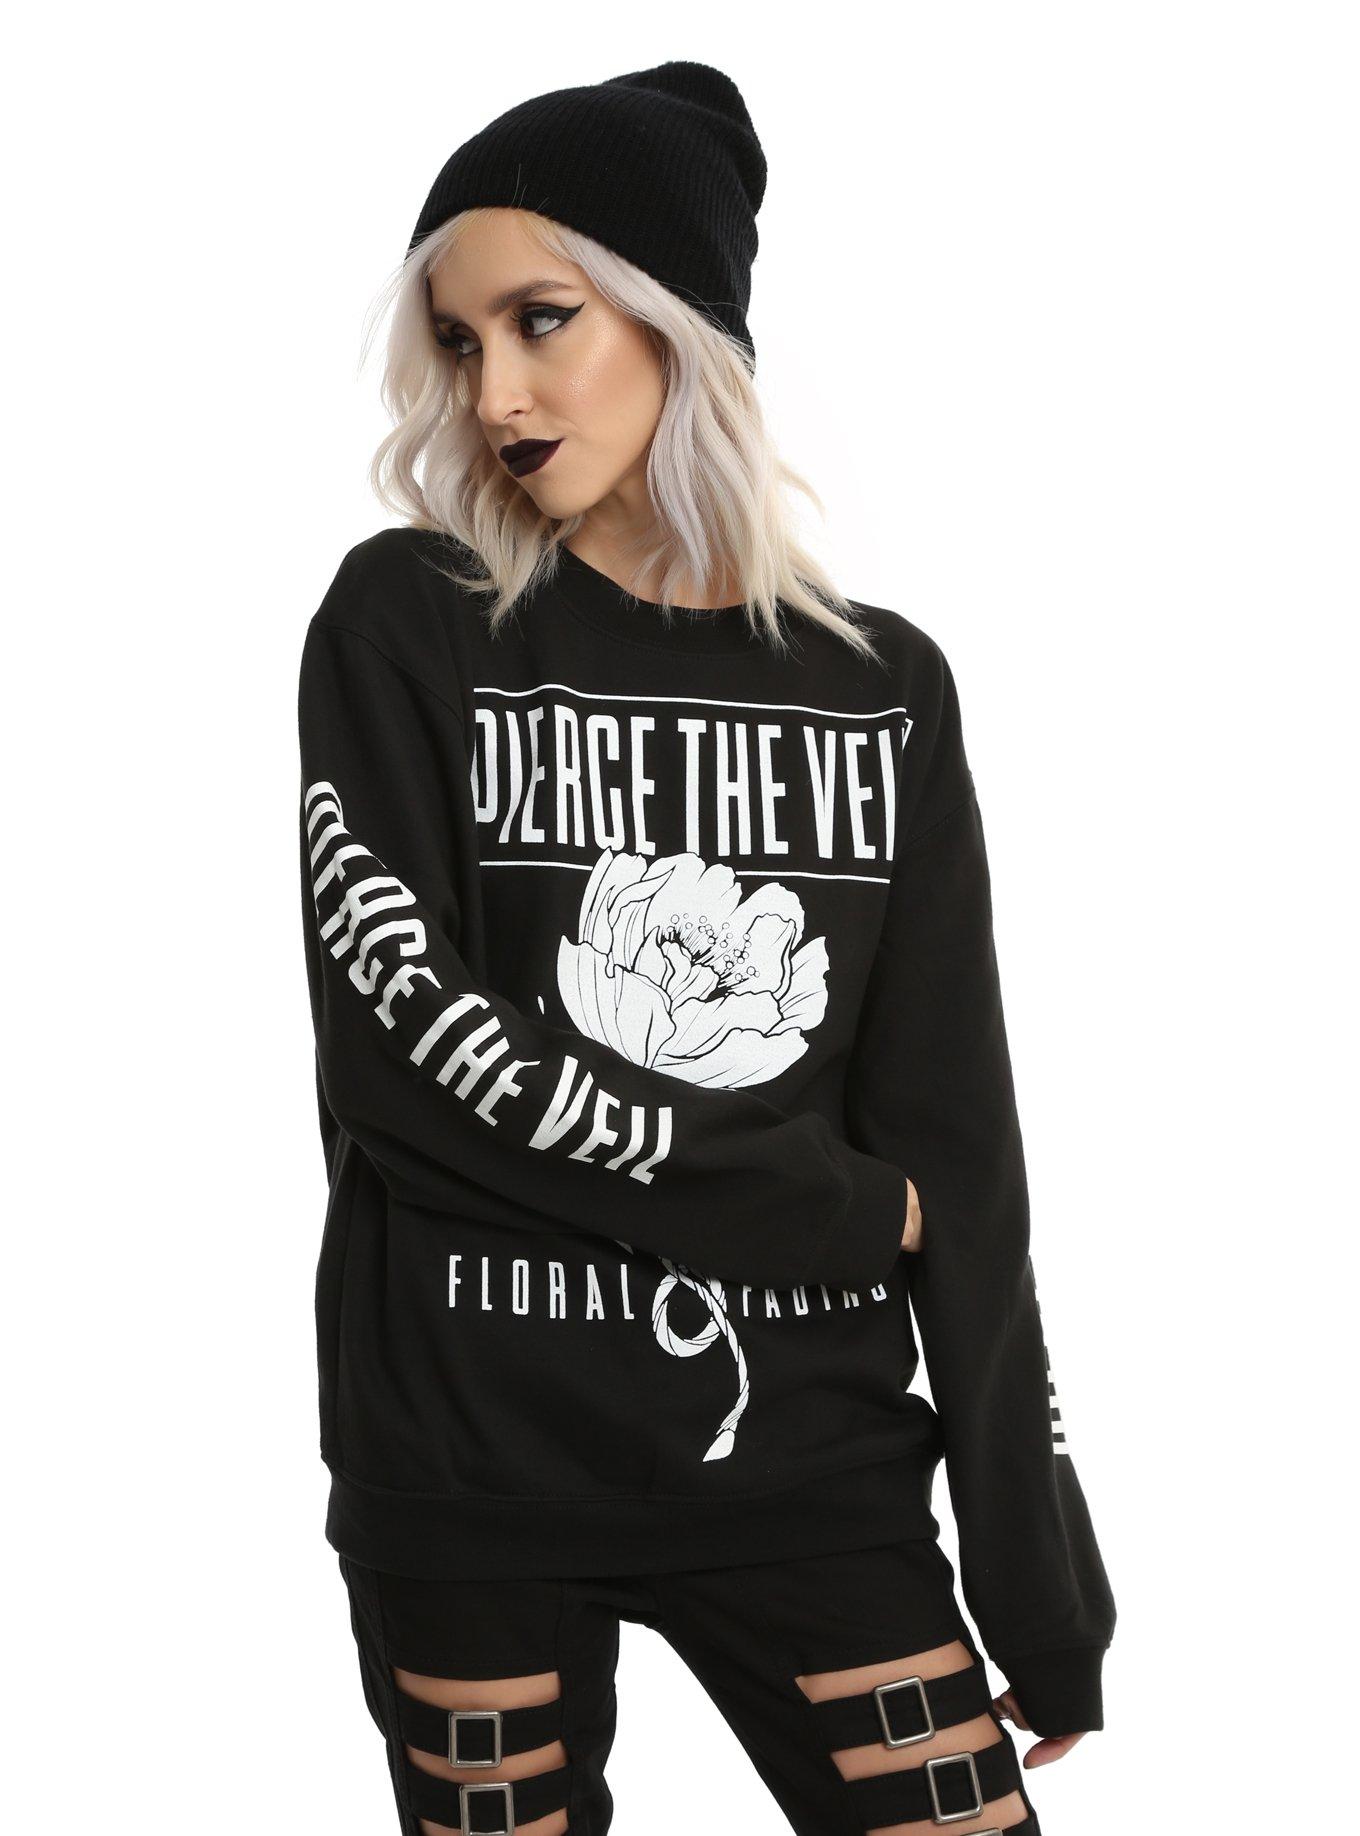 Pierce The Veil Floral & Fading Girls Sweatshirt, BLACK, hi-res